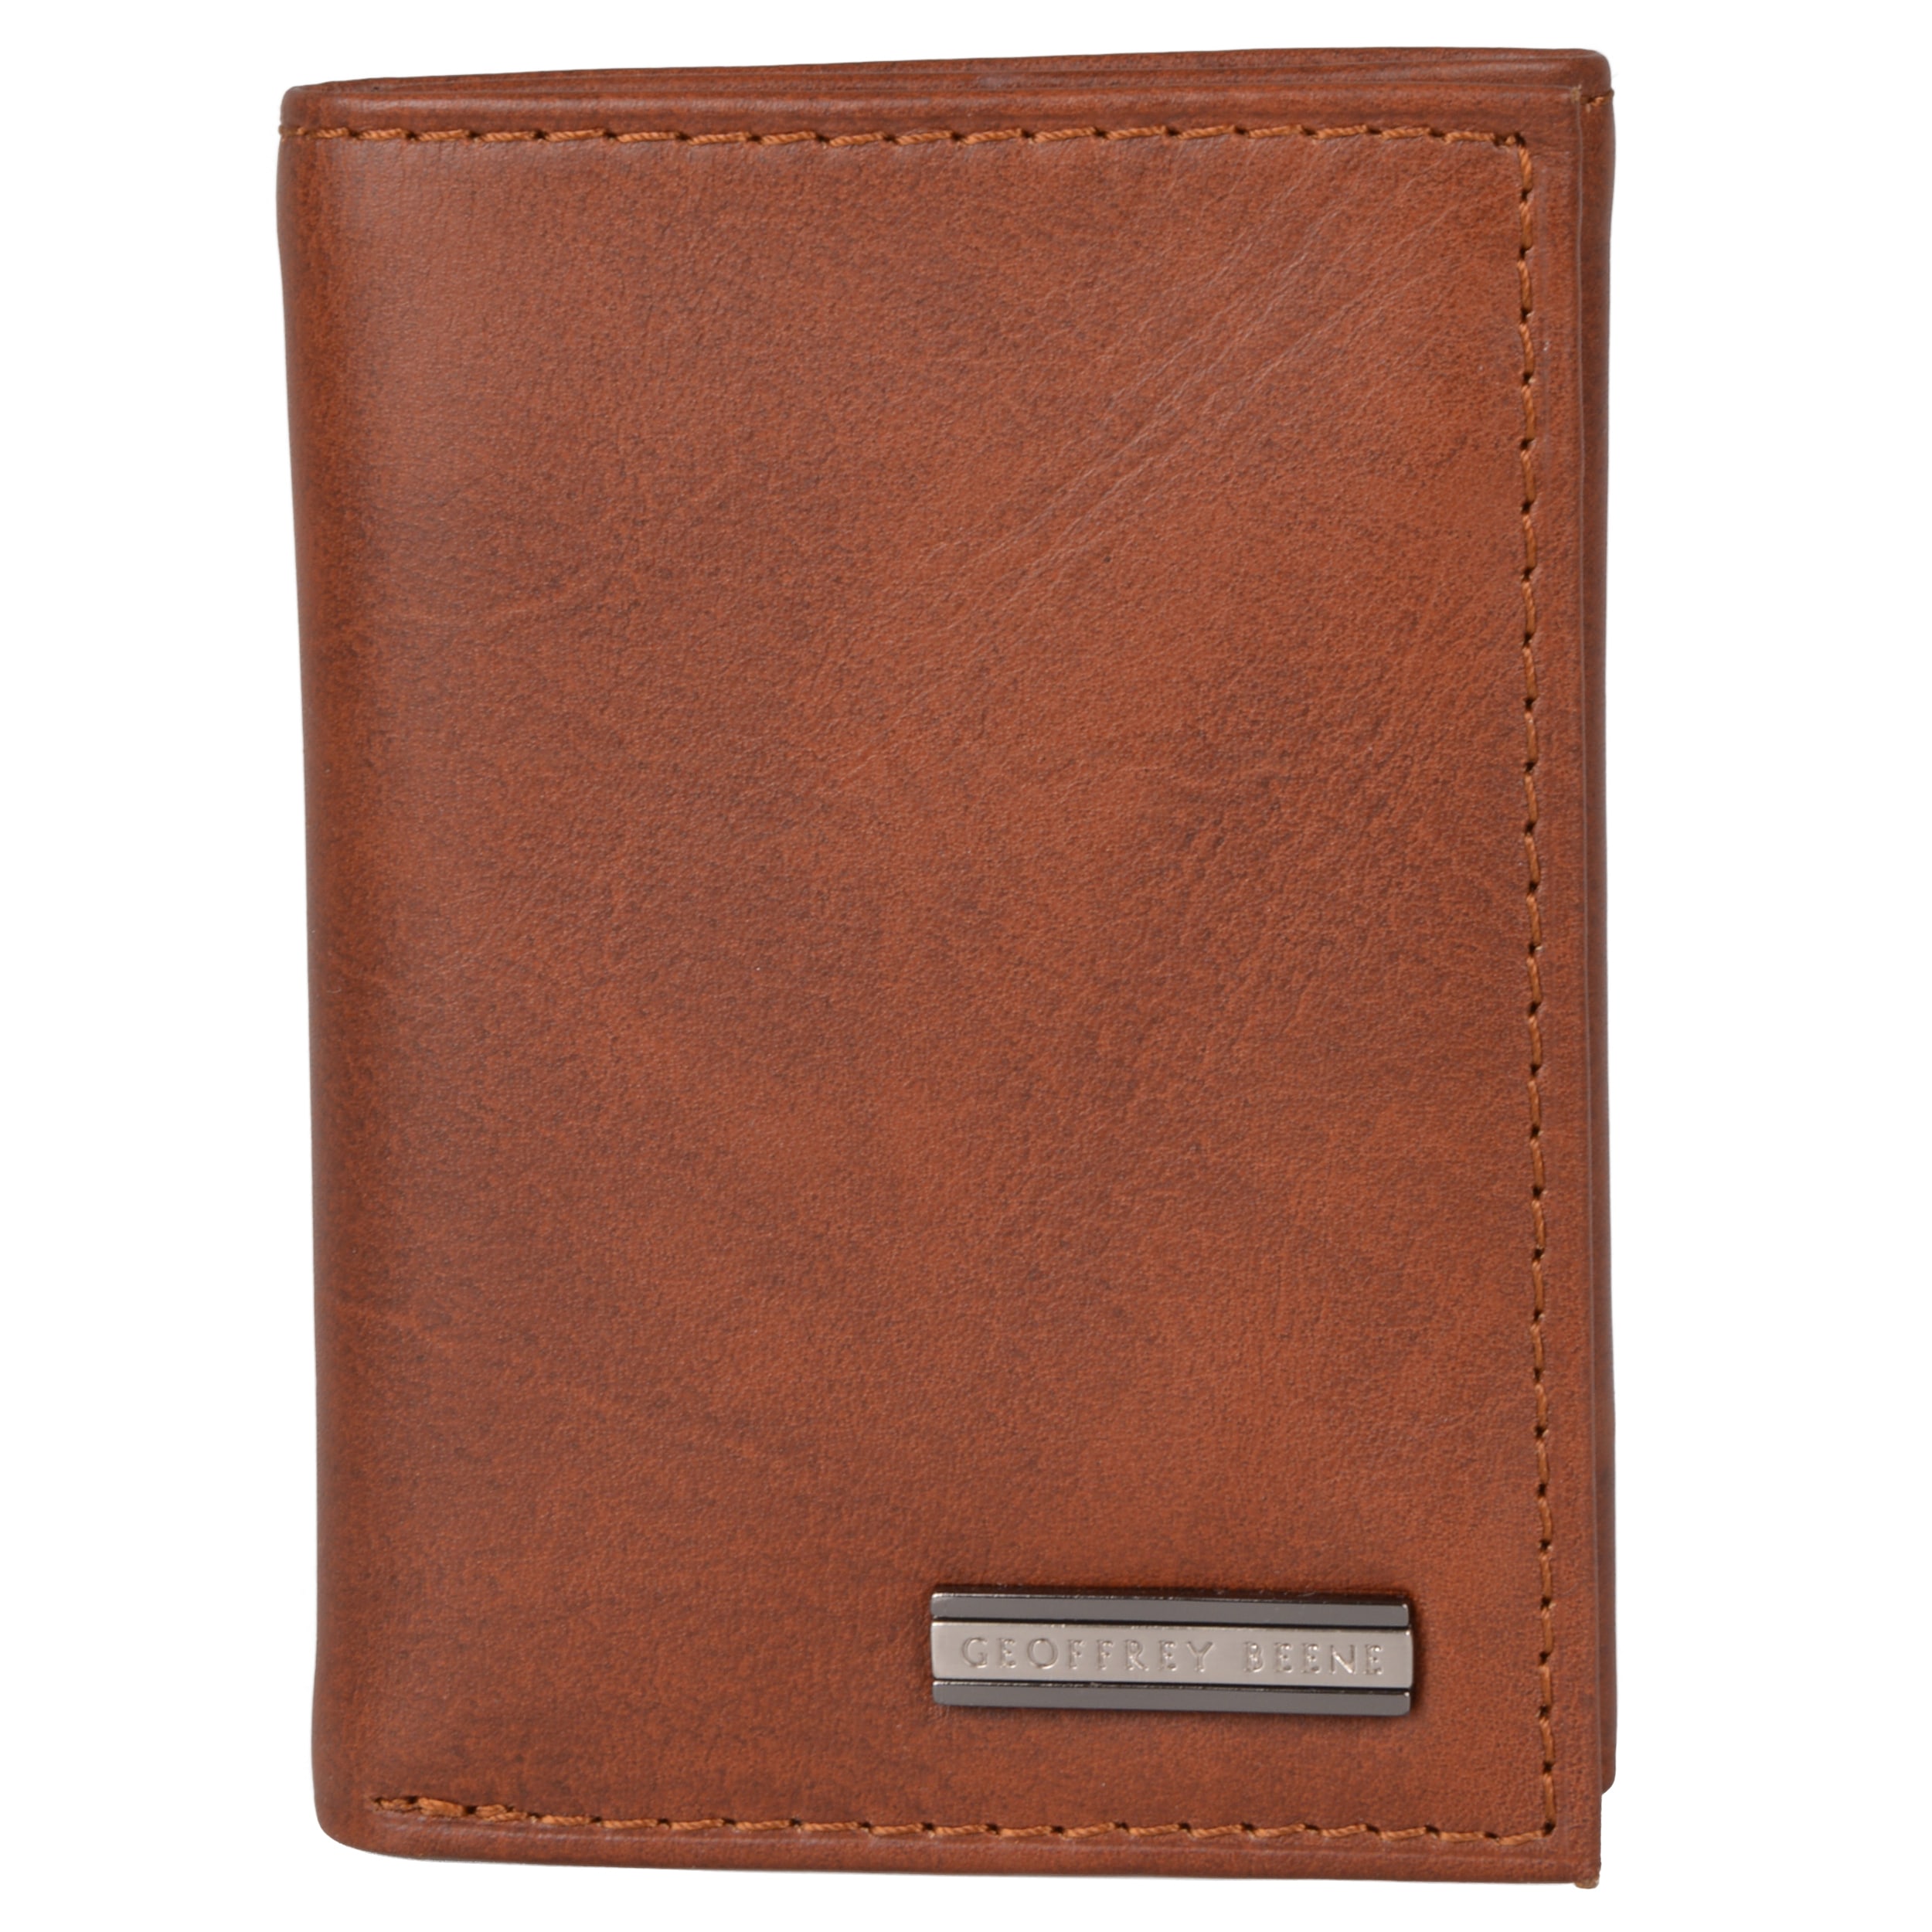 Geoffrey Beene Mens Genuine Leather Tri fold Wallet